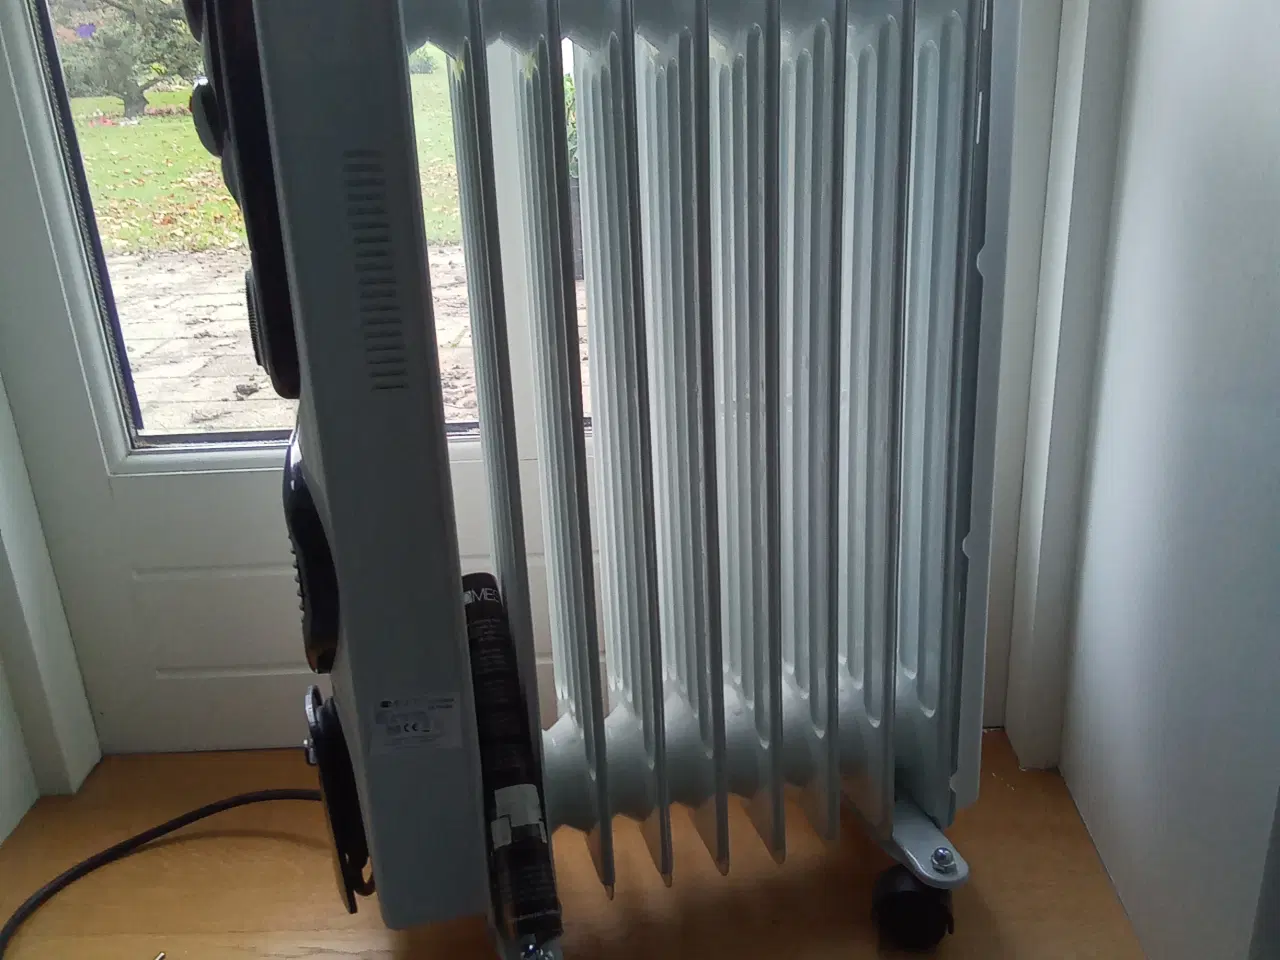 Billede 2 - El radiator 